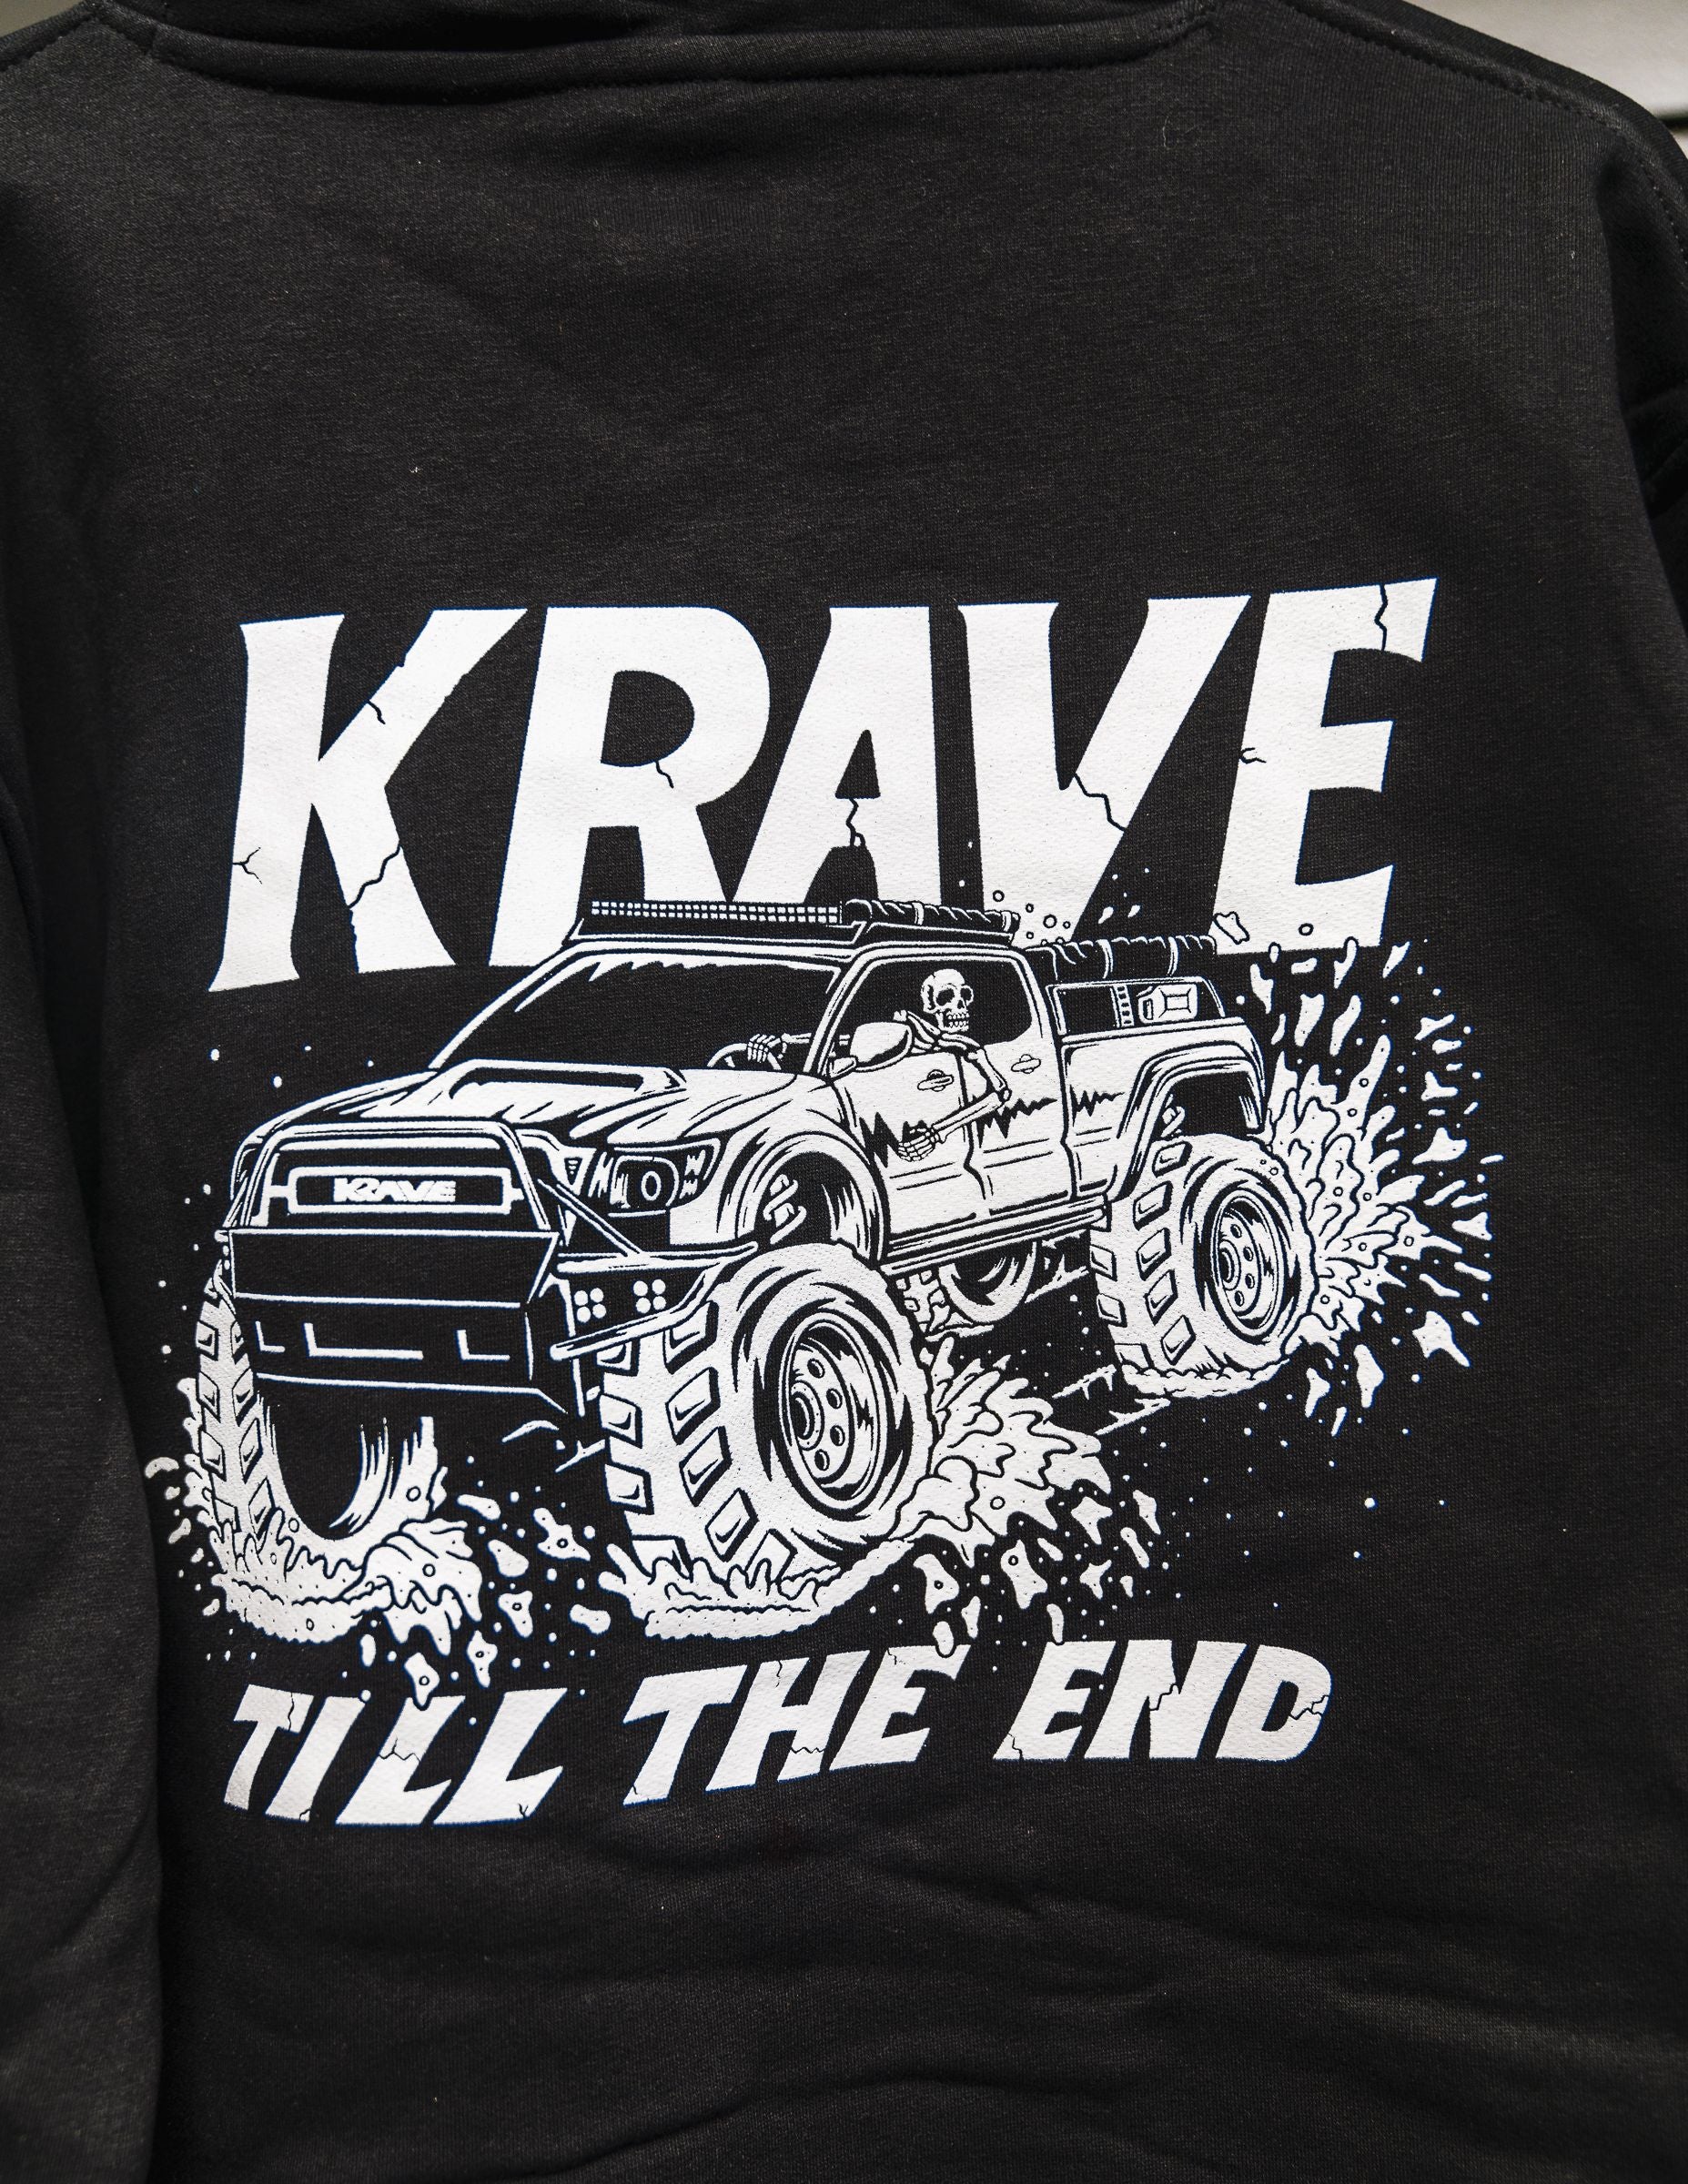 KRave Till The End Pullover